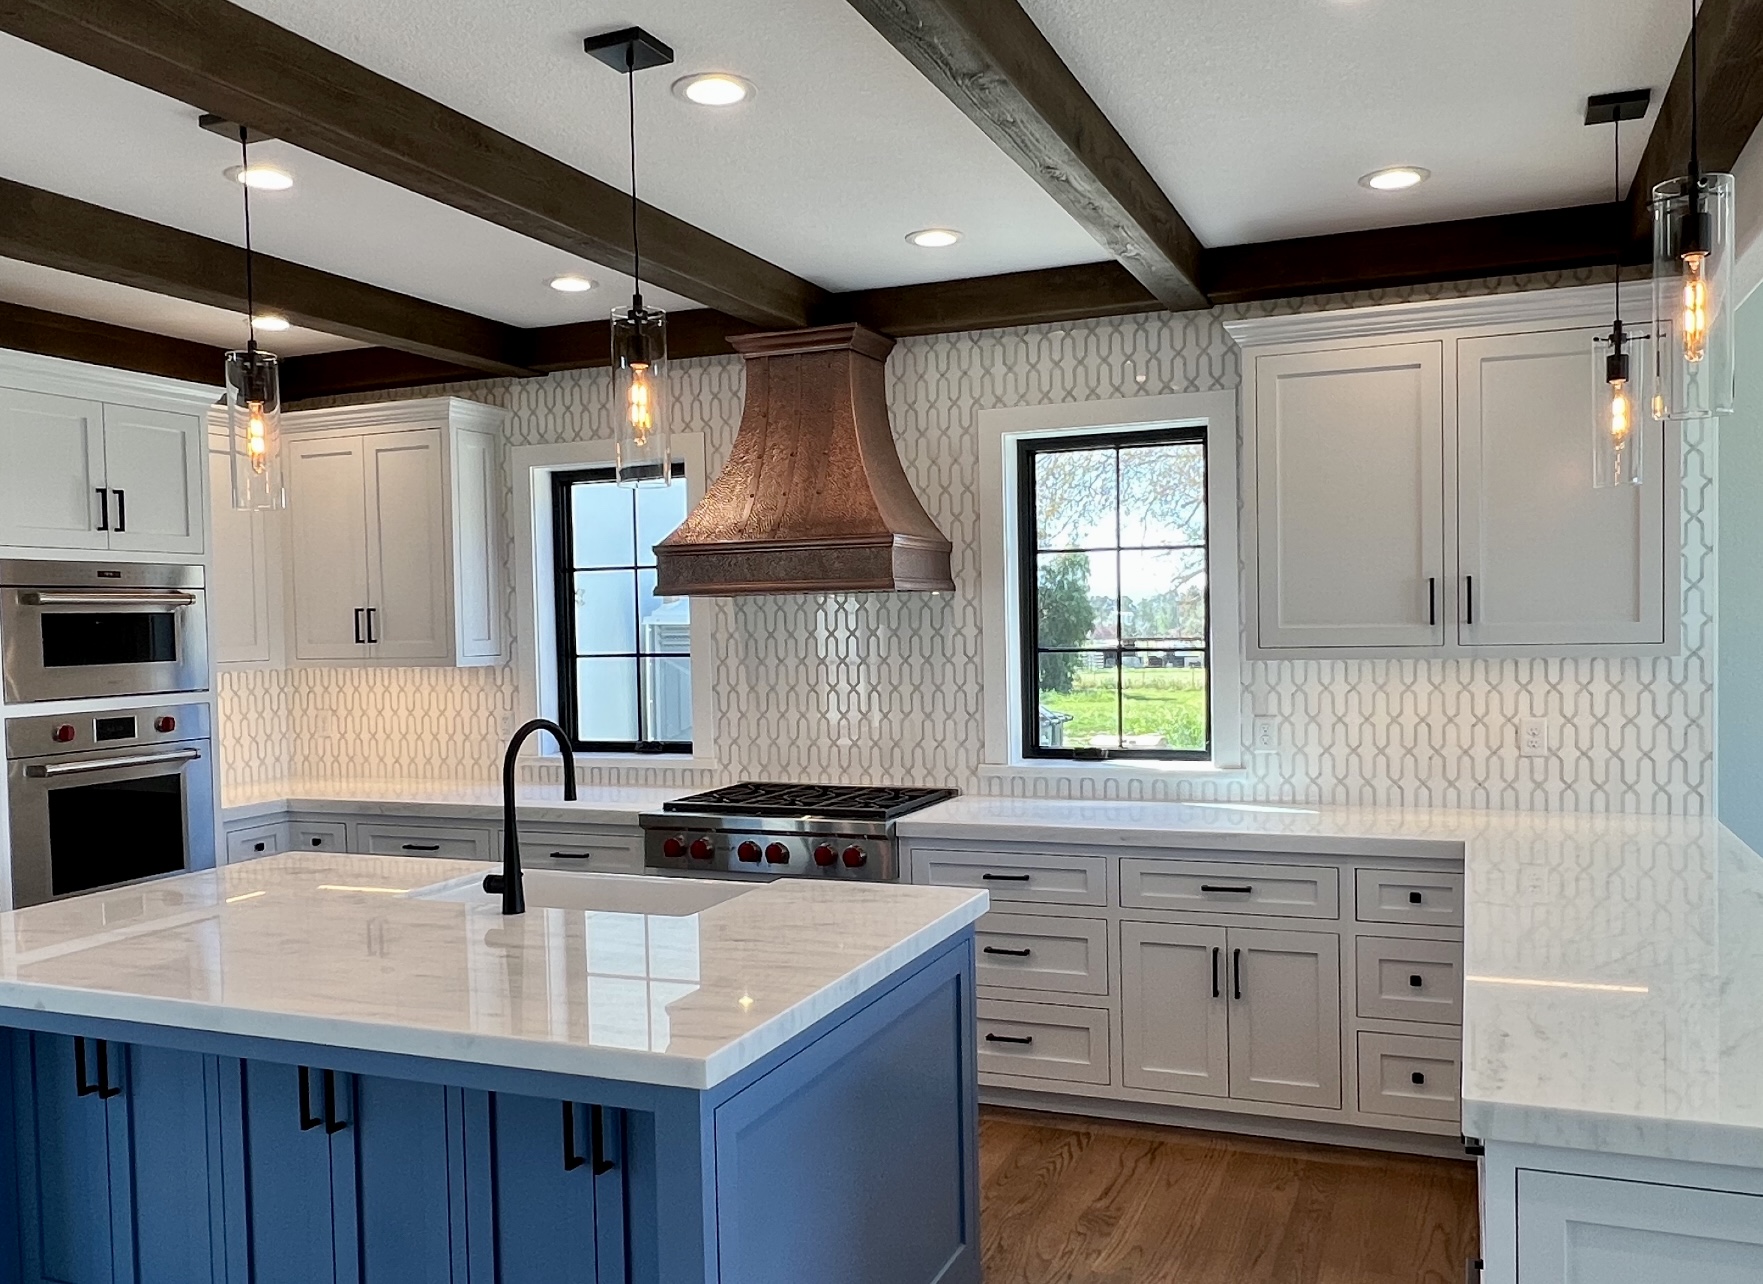 Cottage kitchen design with white kitchen cabinets, elegant marble kitchen countertops, a beautiful marble backsplash, and explore unique kitchen sink idea